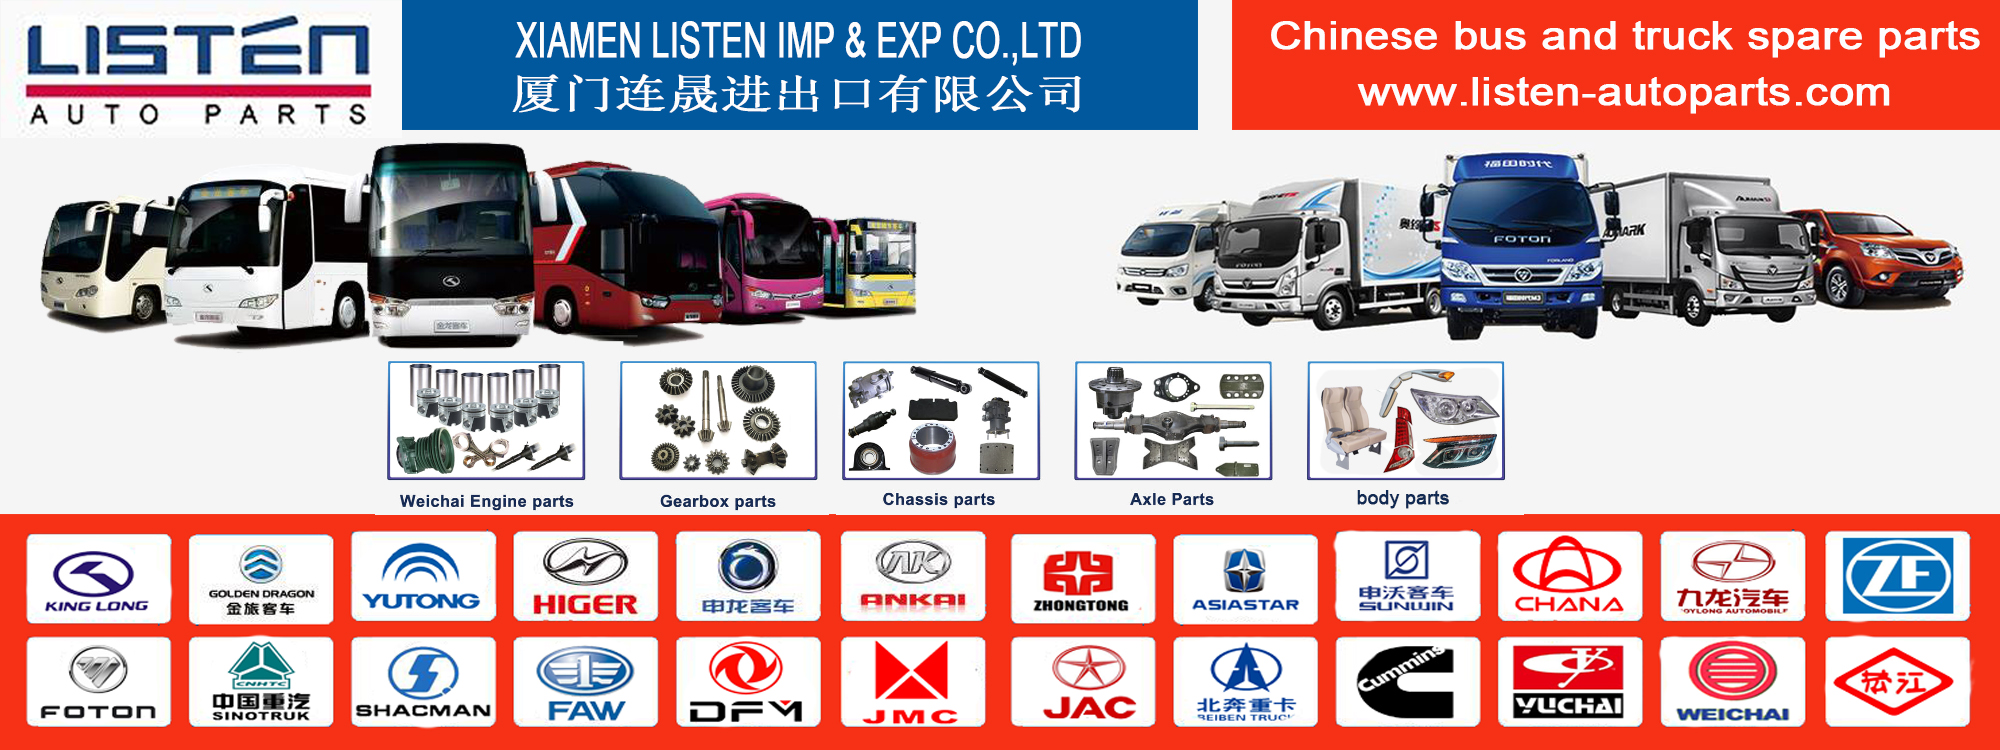 Xiamen Listen Imp & Exp Co., Ltd